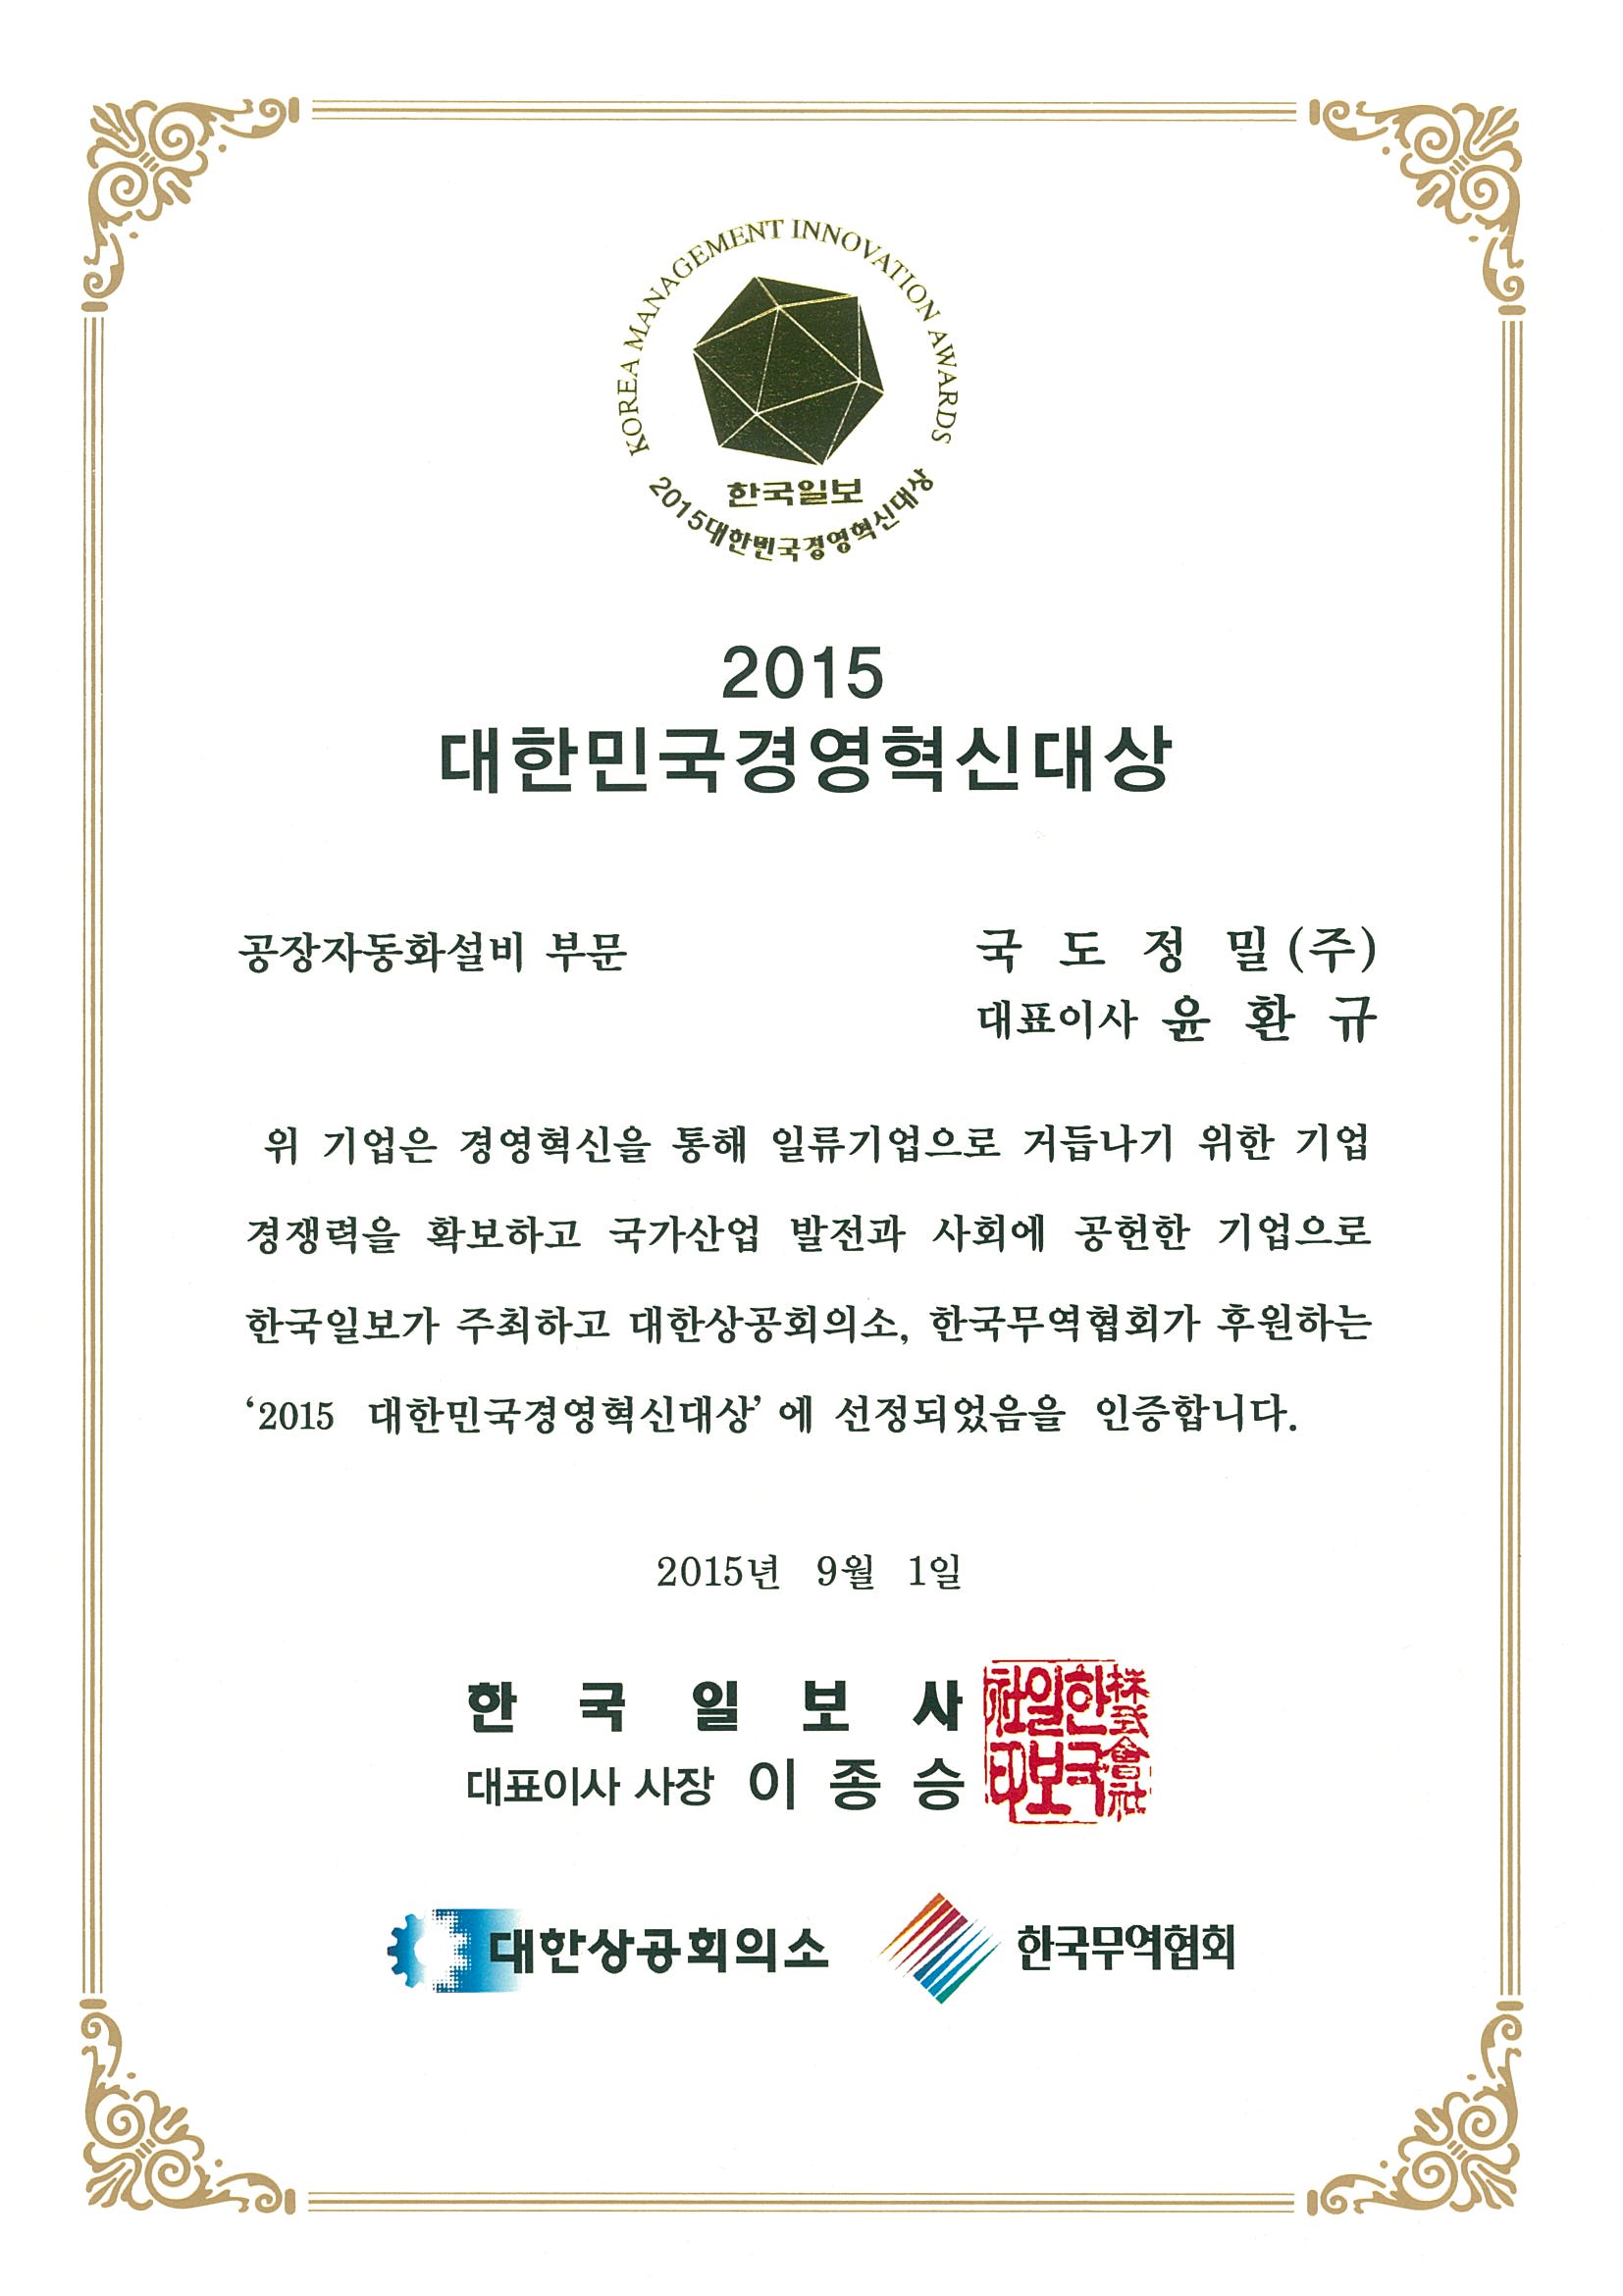 Korea Management Innovation Awards